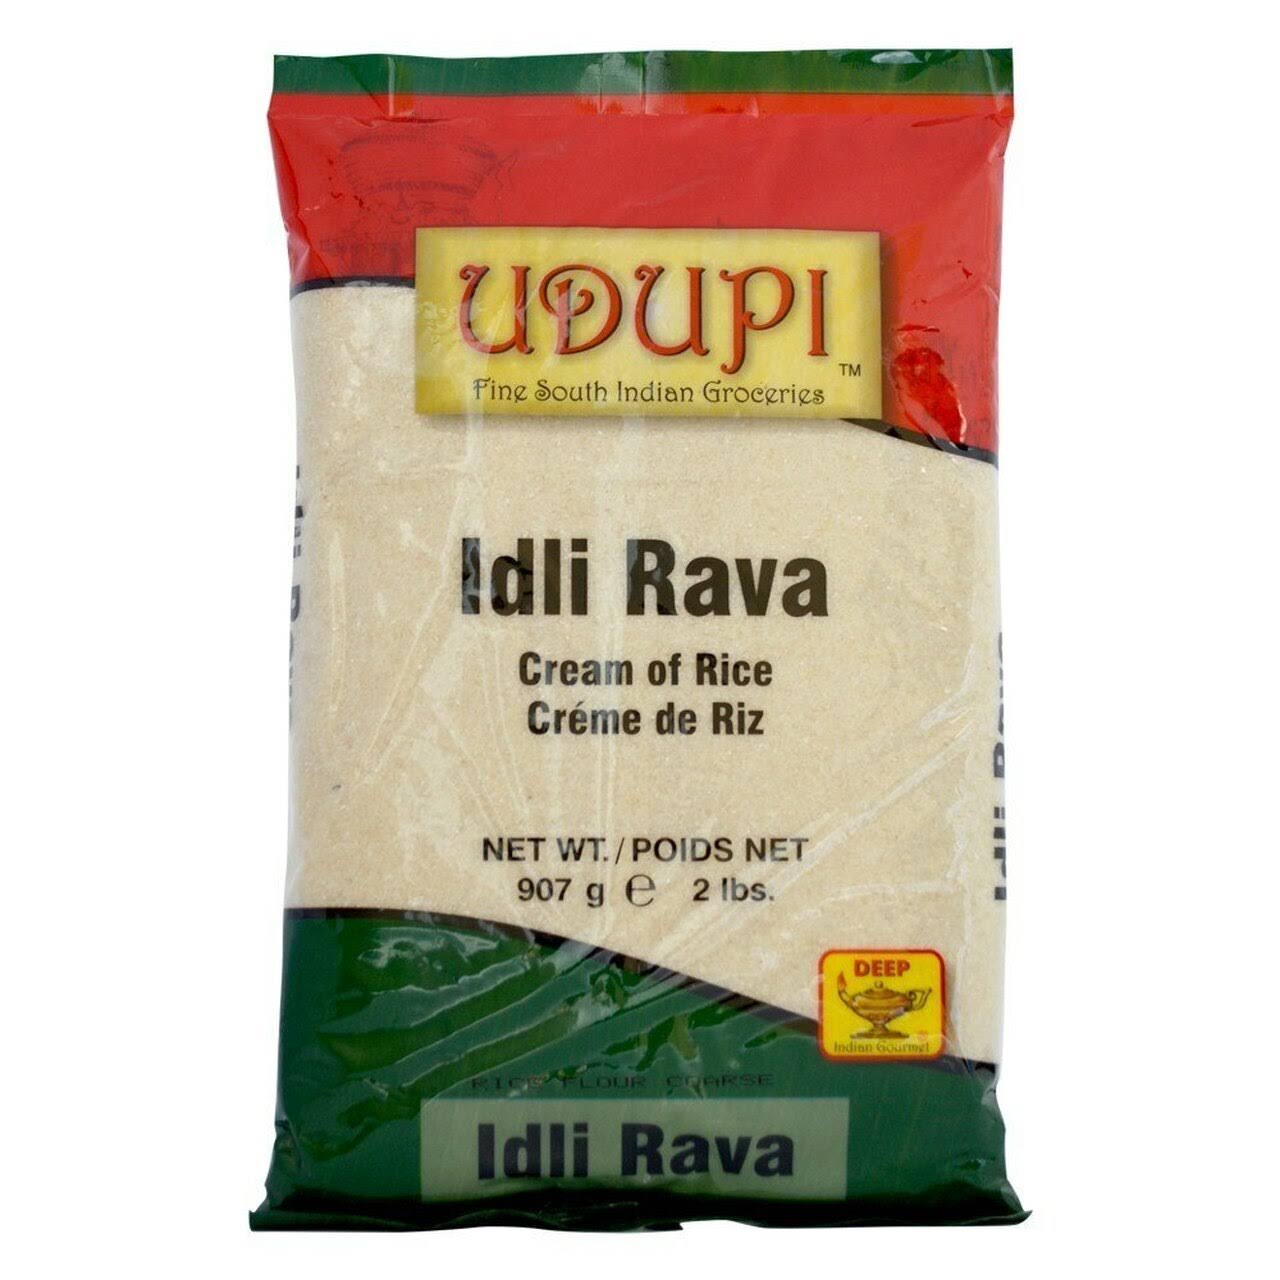 Deep Idli Rava (Cream of Rice) 2 lb